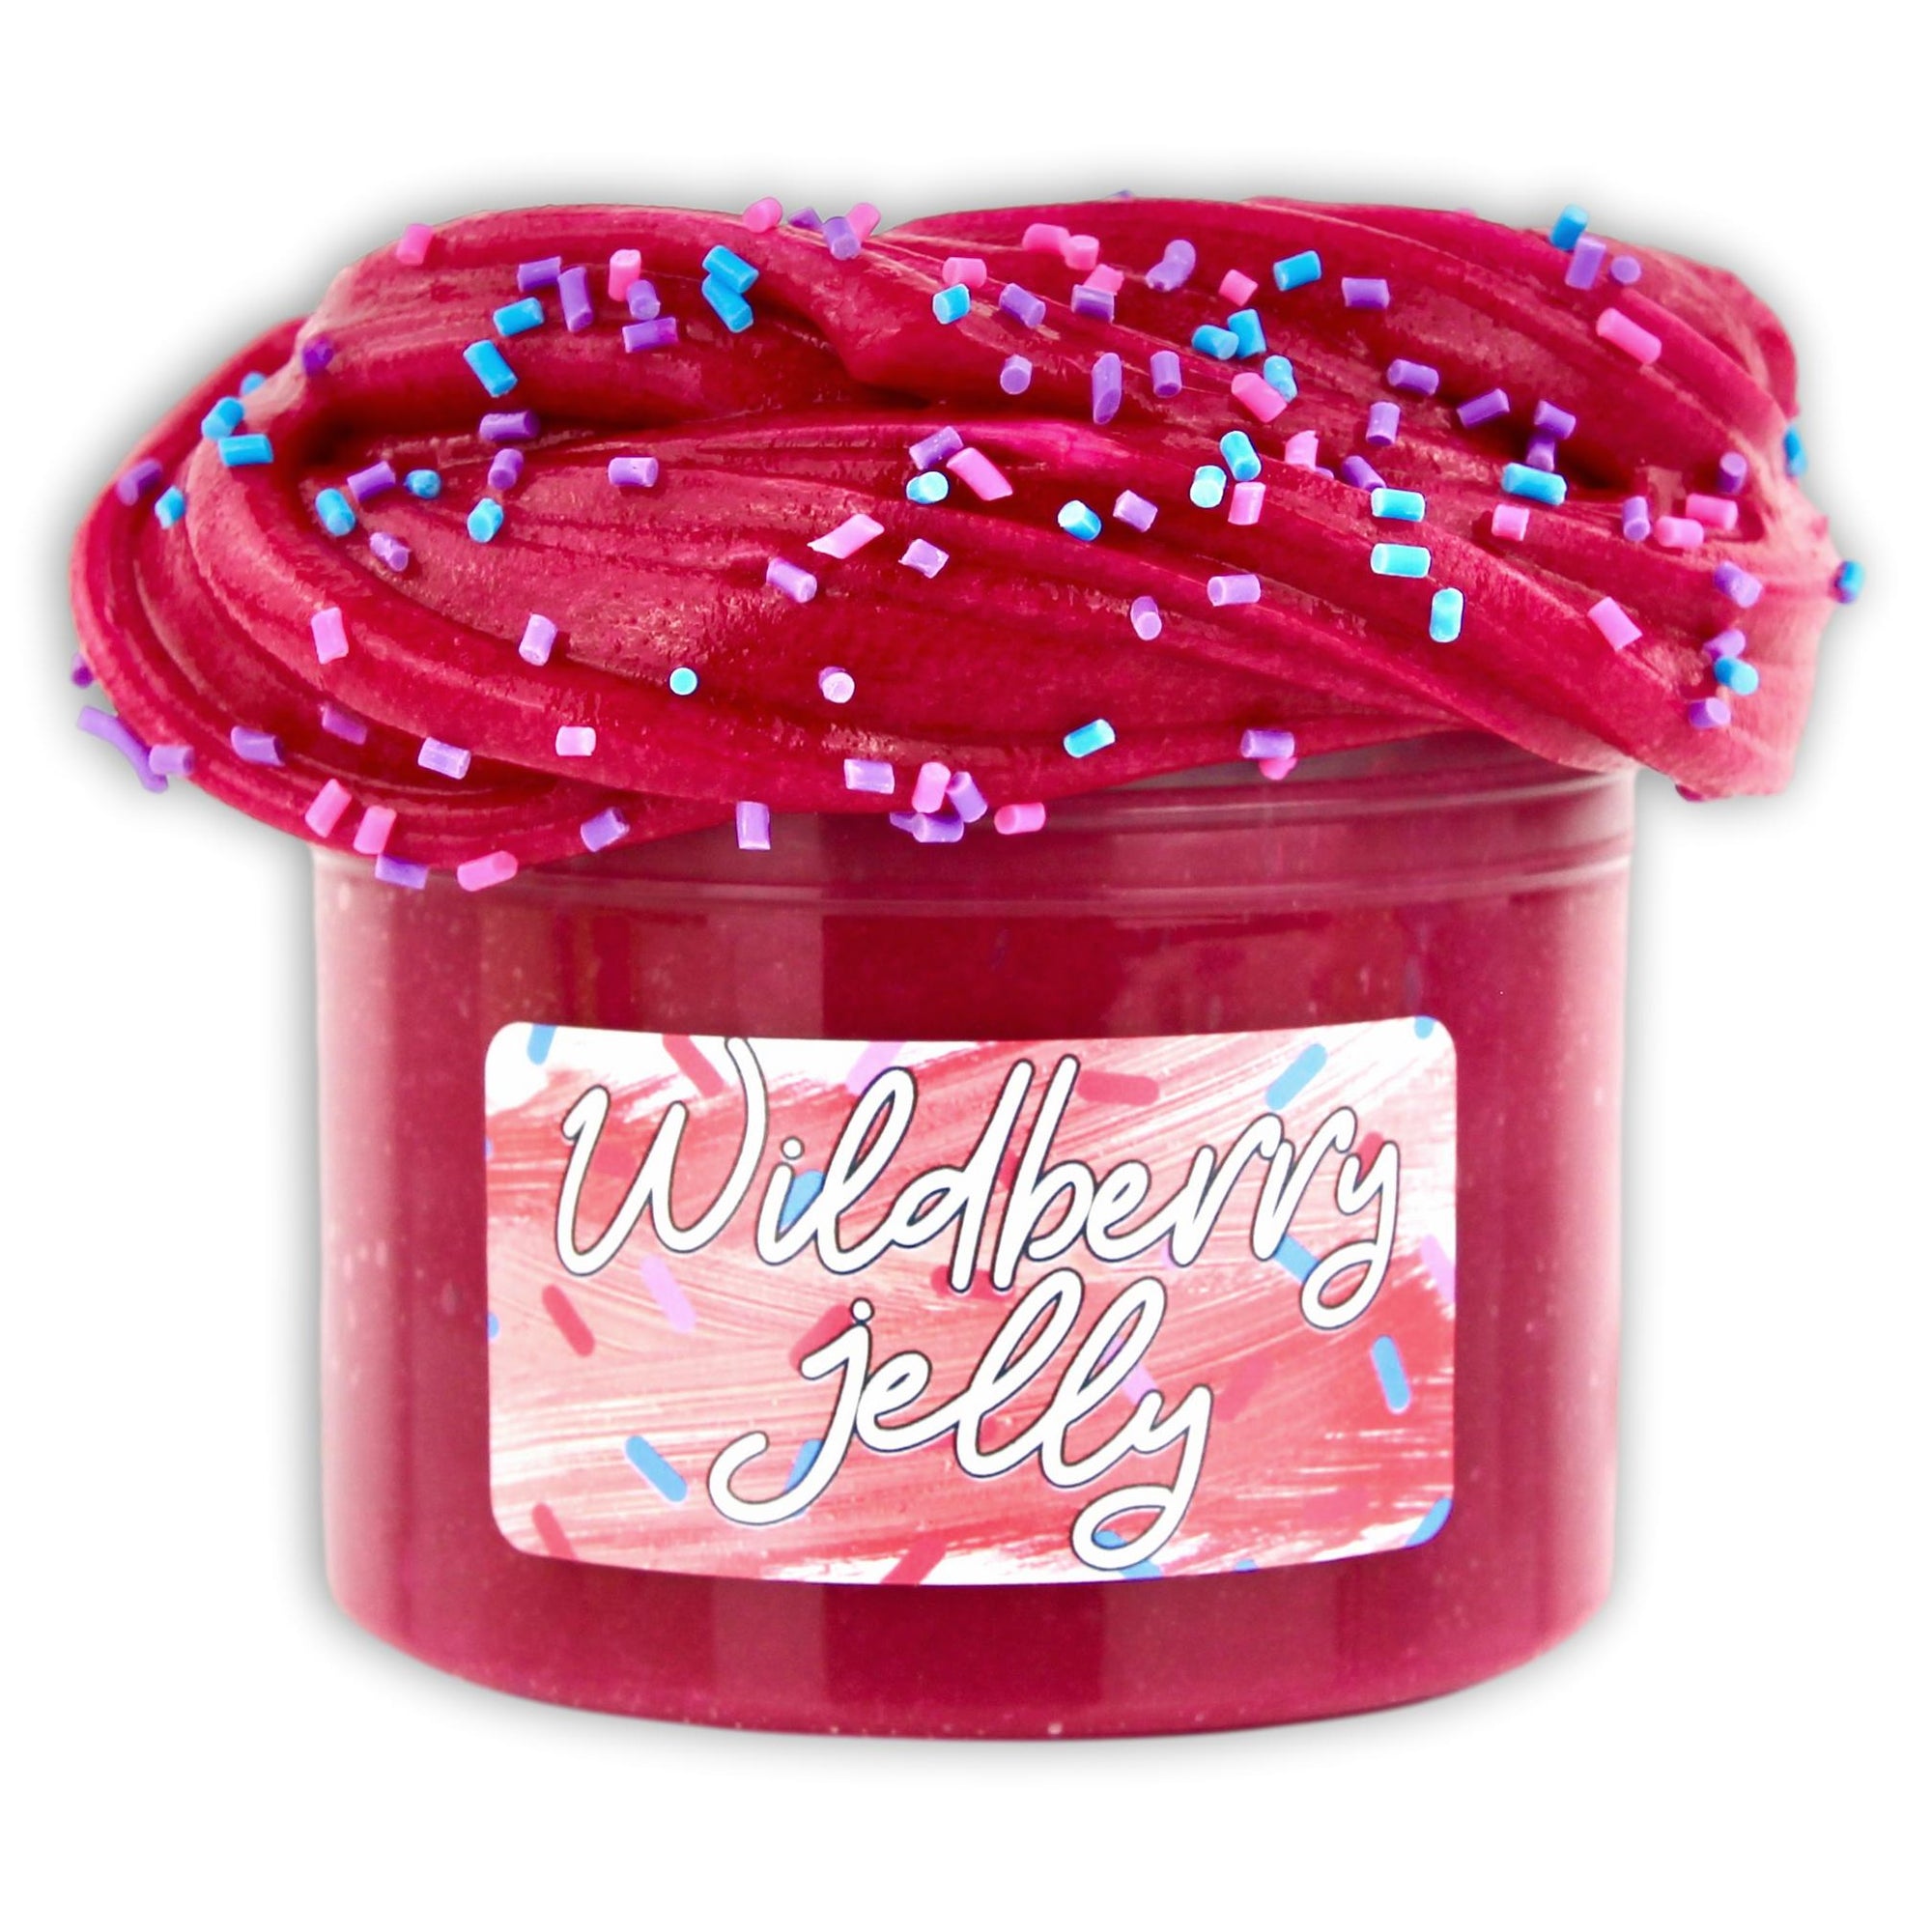 Wildberry Jelly Slime - Shop Slime - Dope Slimes